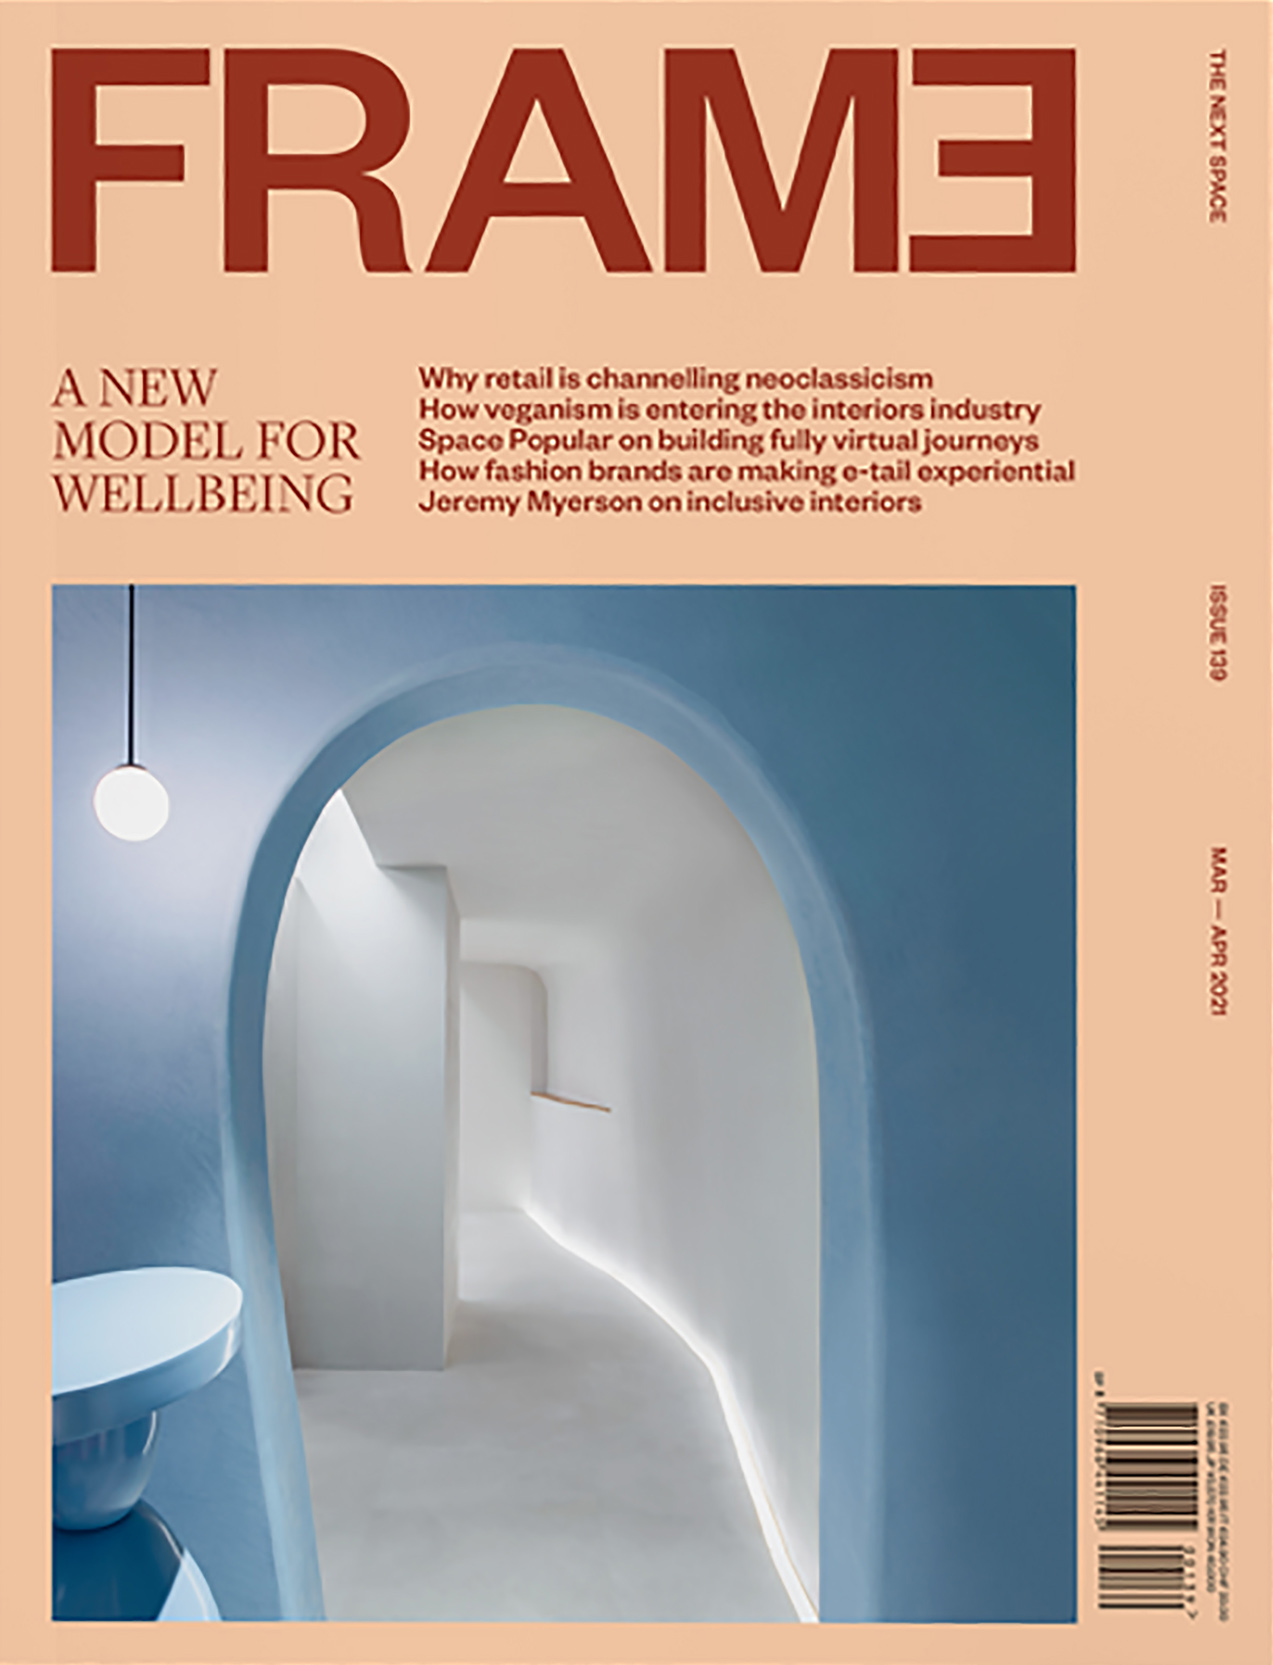 FRAME magazine